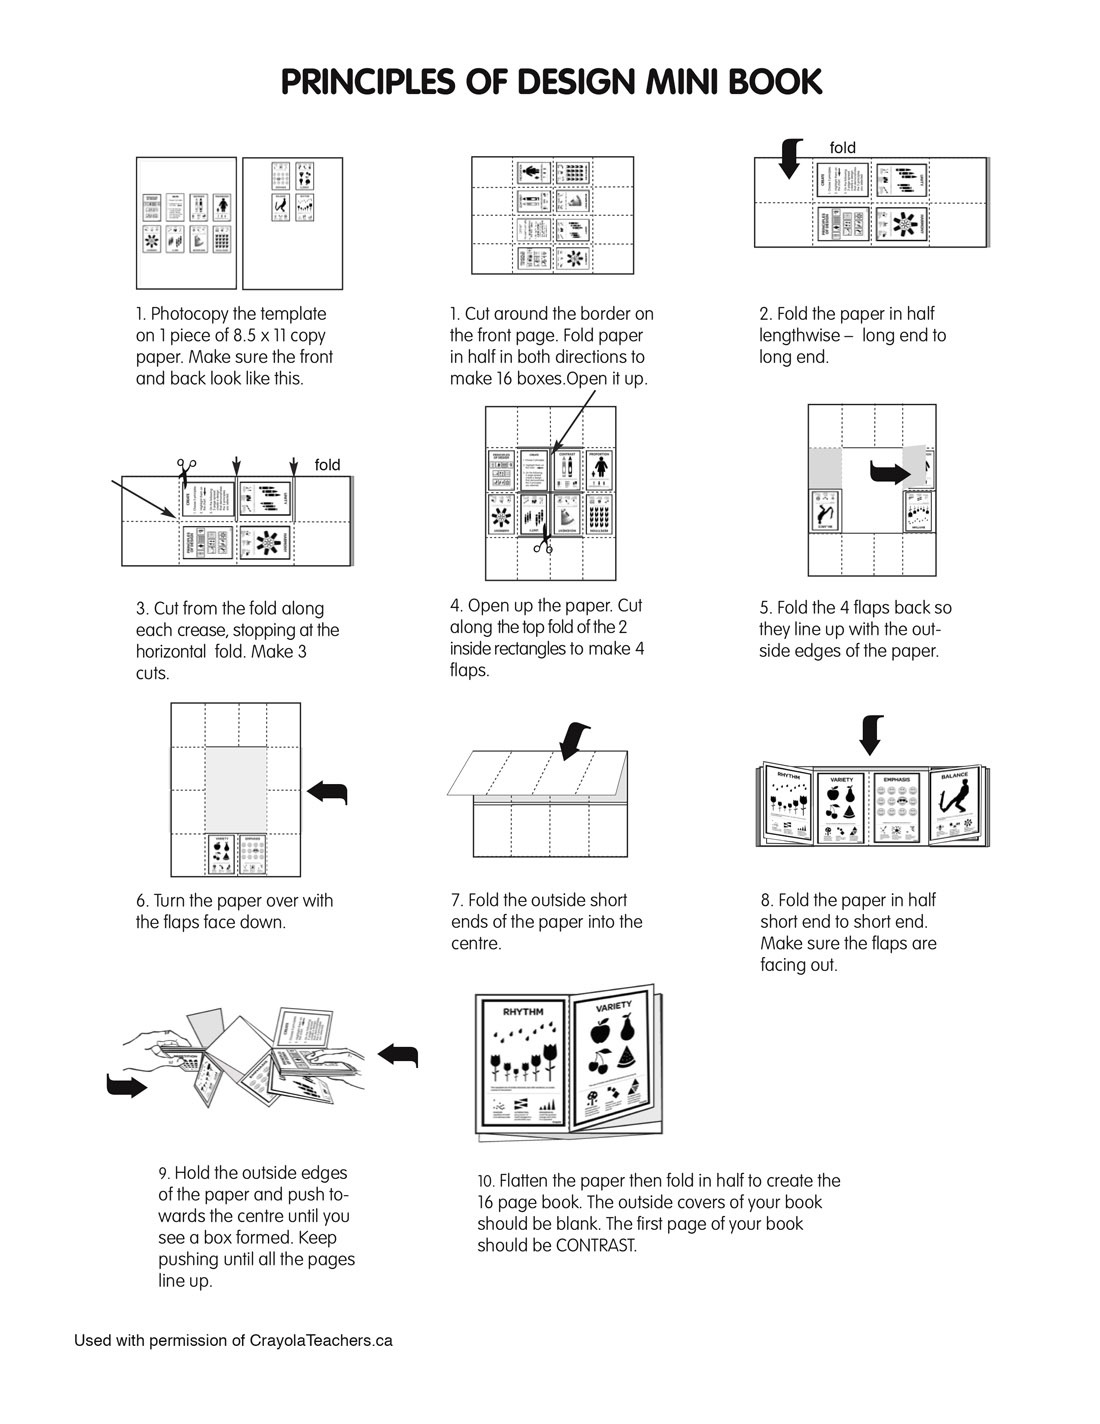 Principles of Design Mini Book